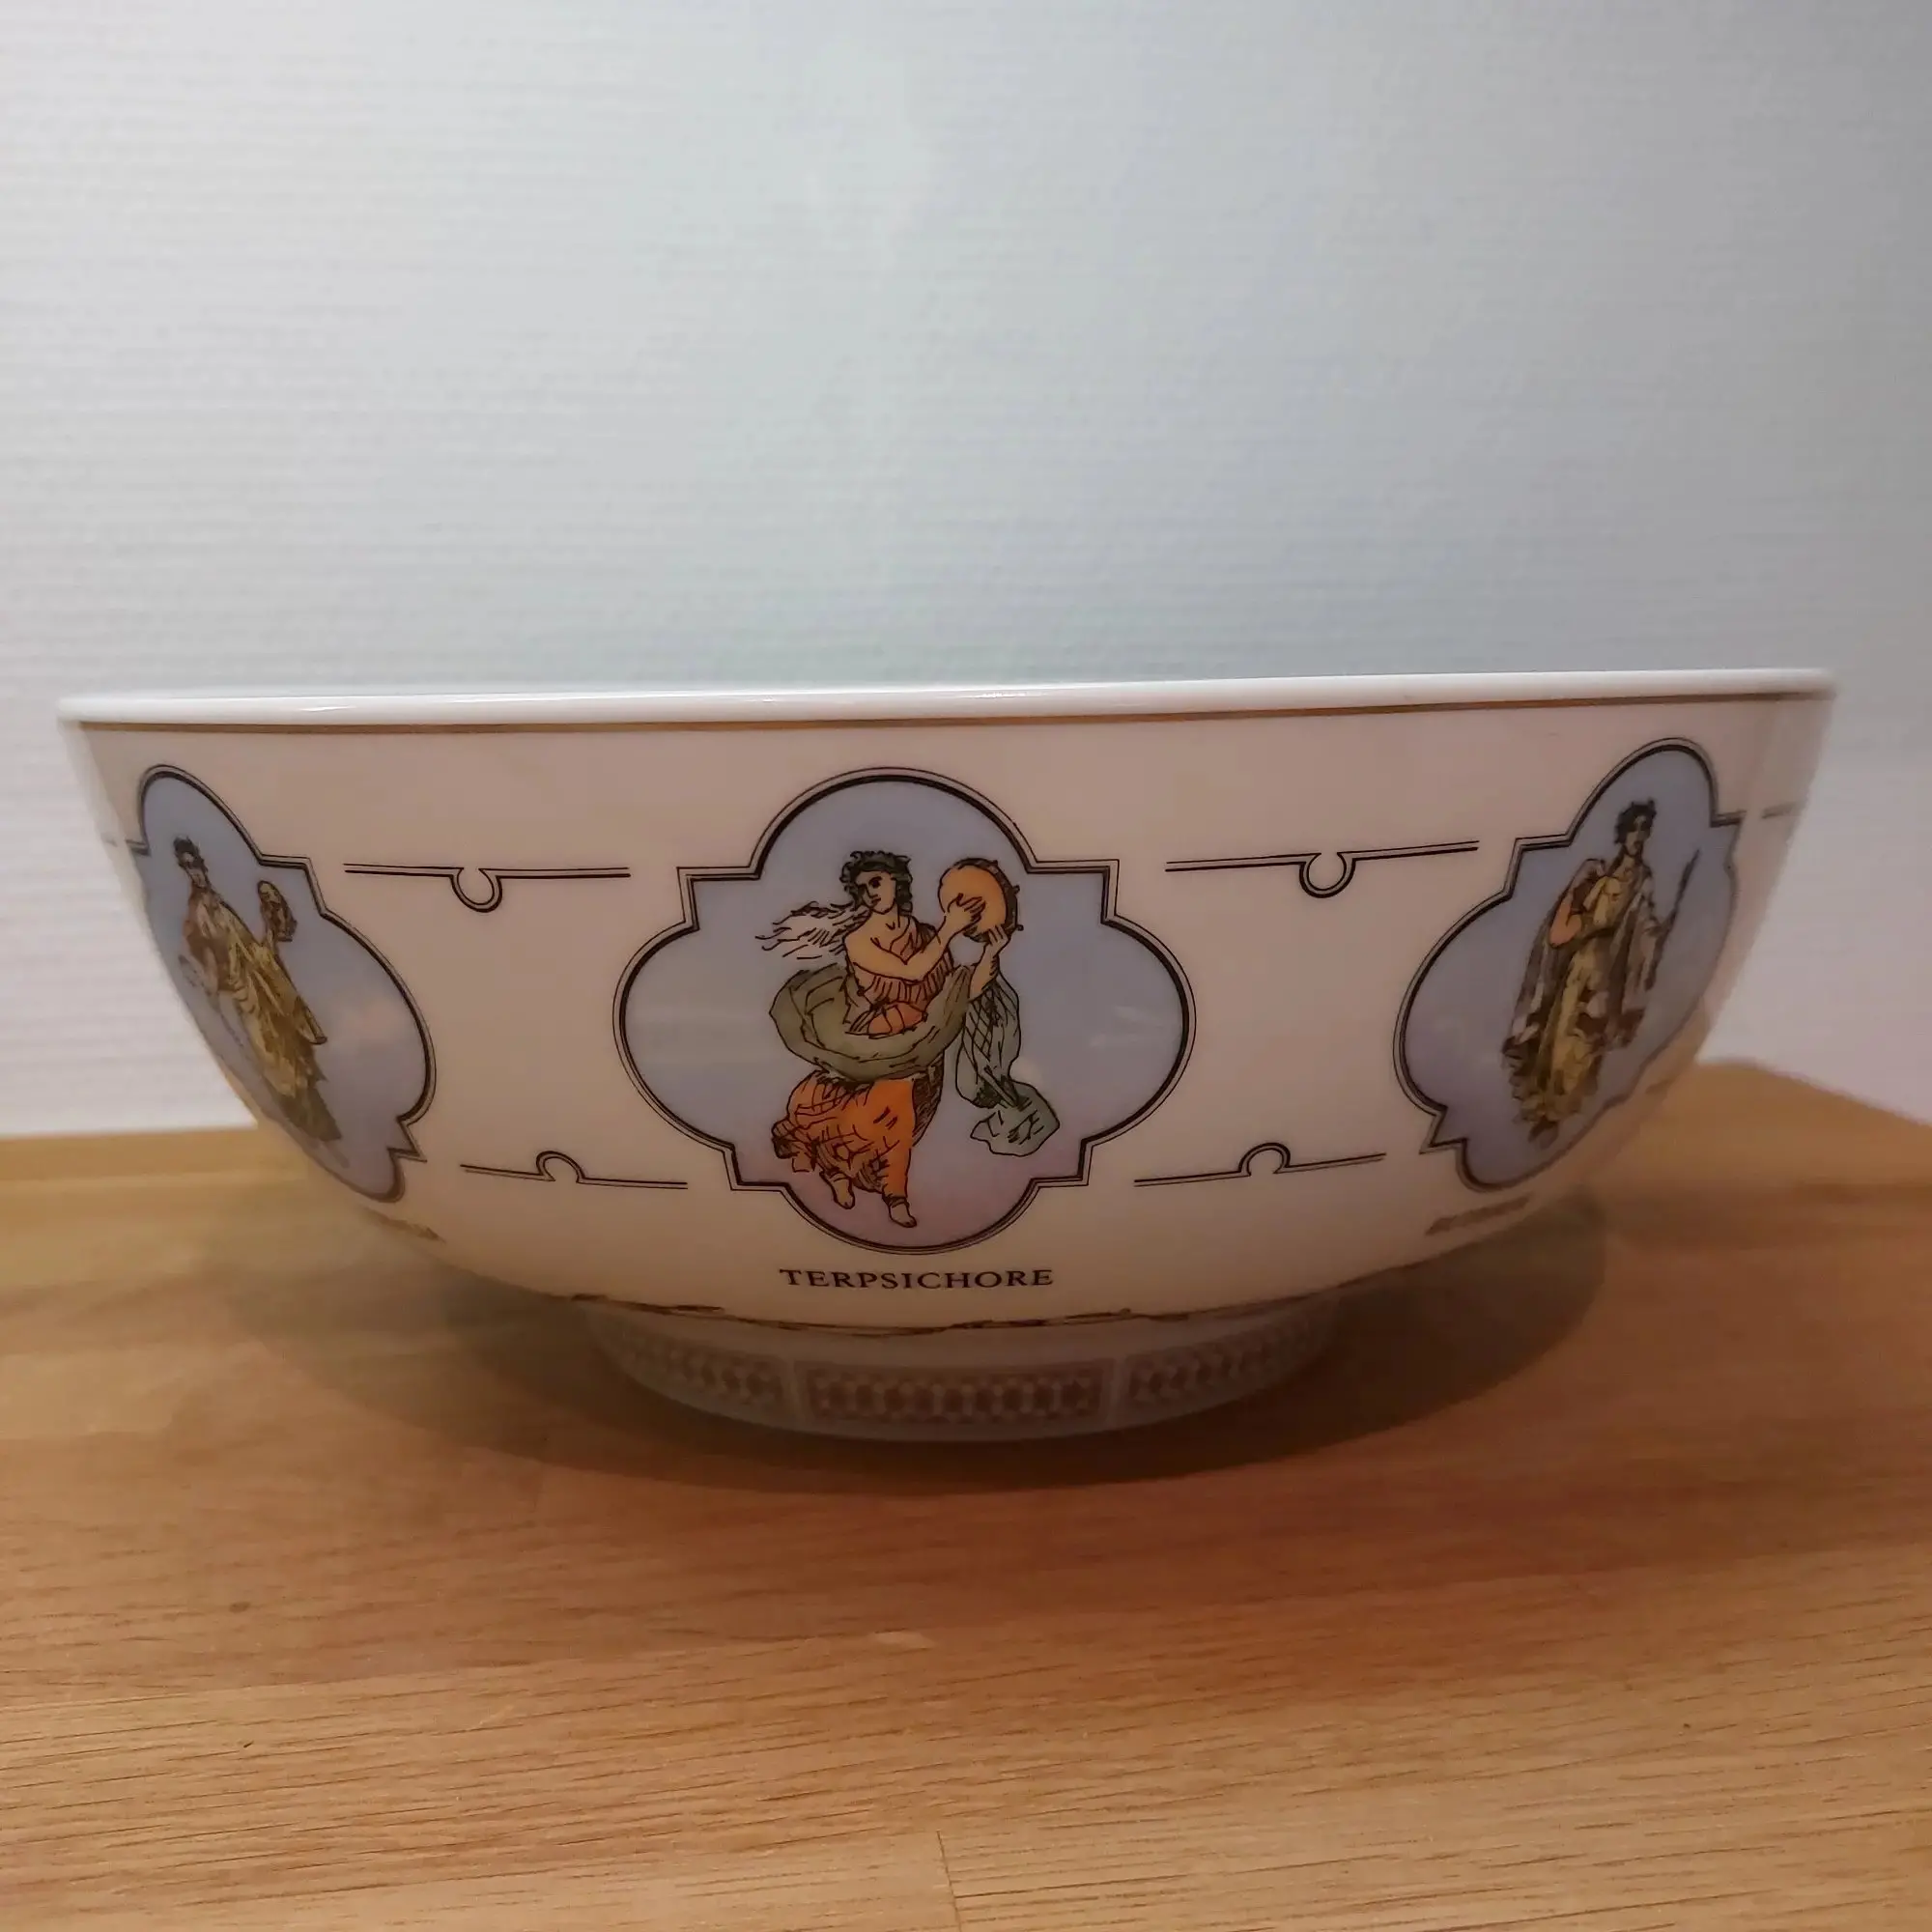 Bing  Grøndahl porcelæn